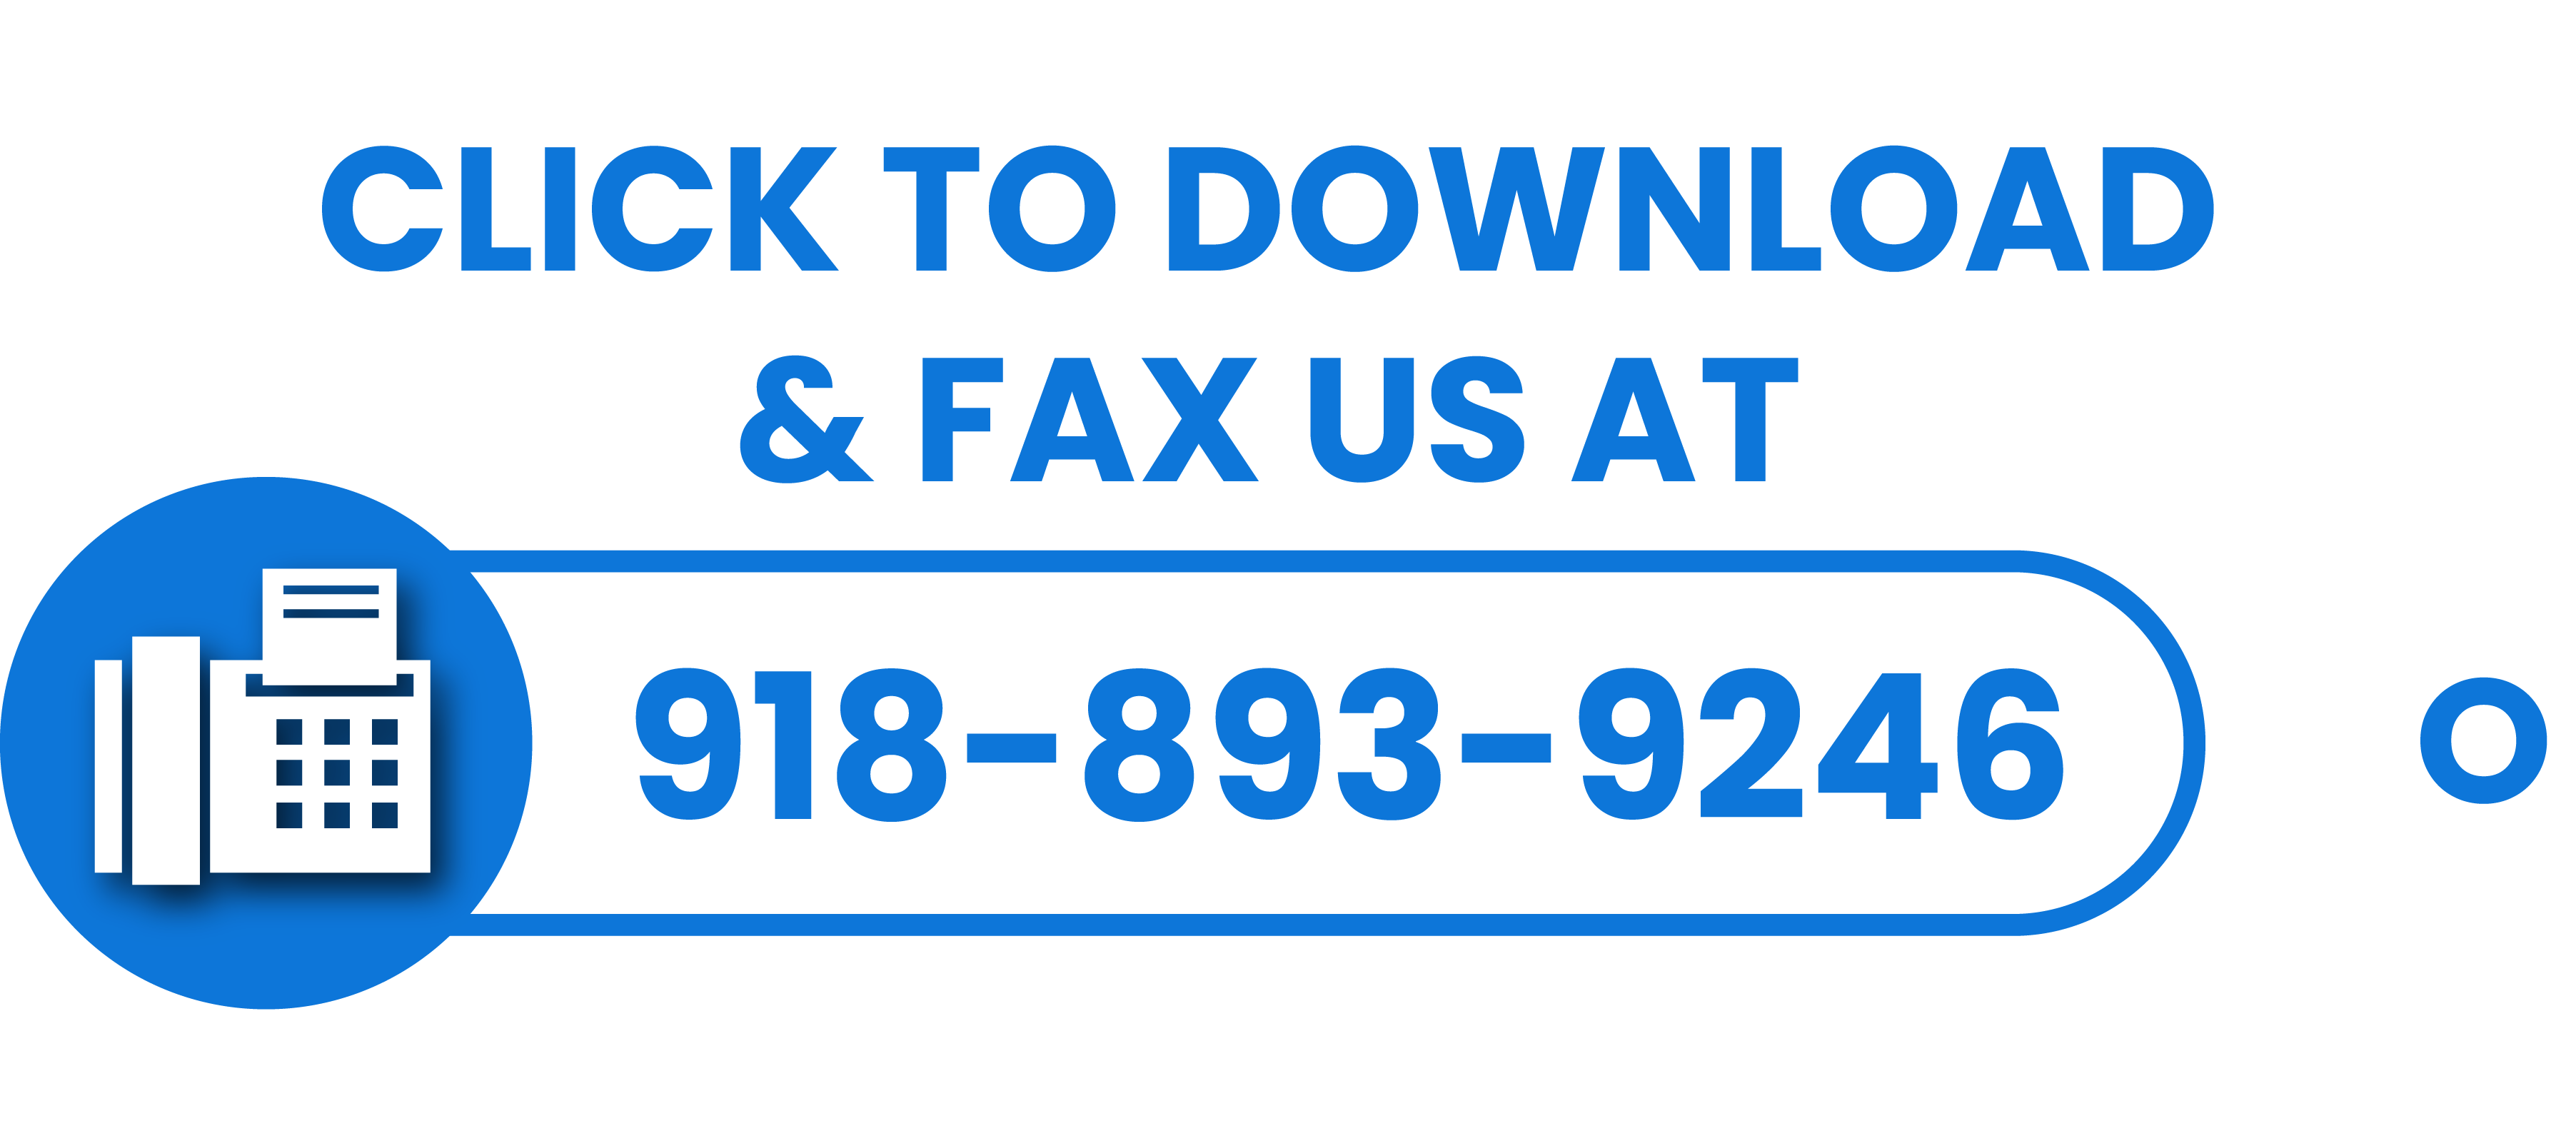 Click to download & fax us at 918-893-9246